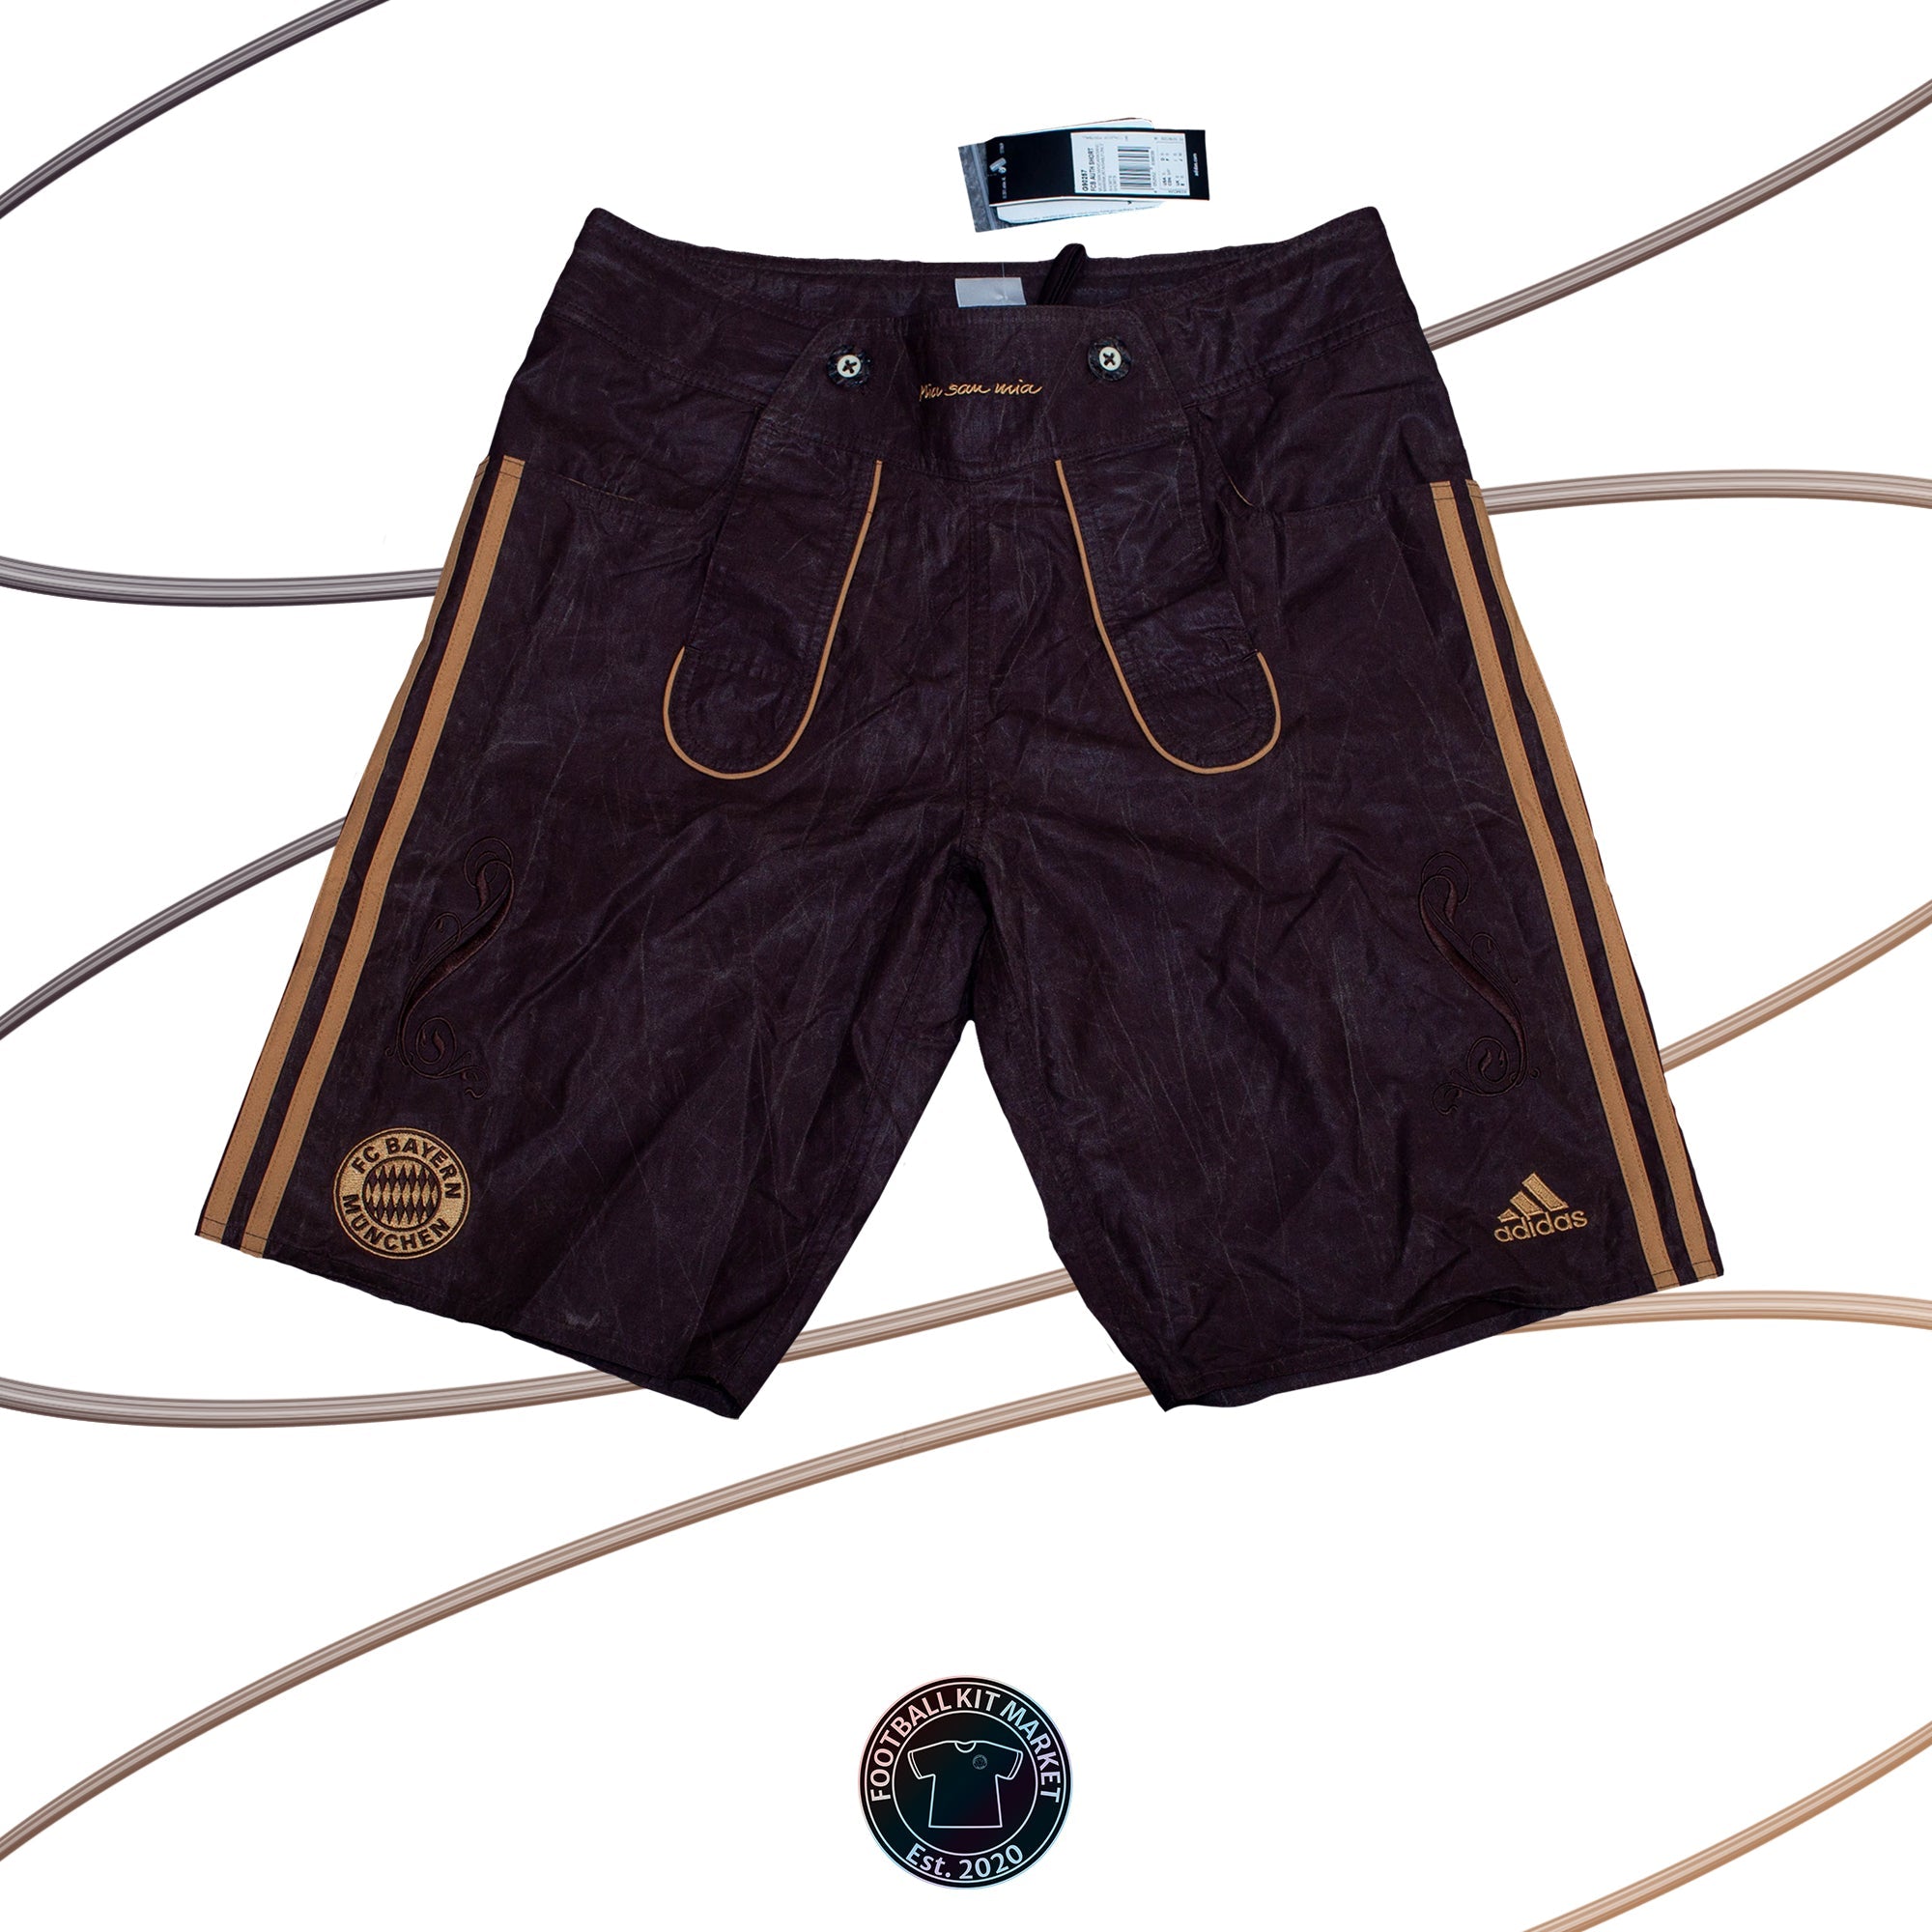 Genuine BAYERN MUNICH Shorts (2013-2014) - ADIDAS (S) - Product Image from Football Kit Market